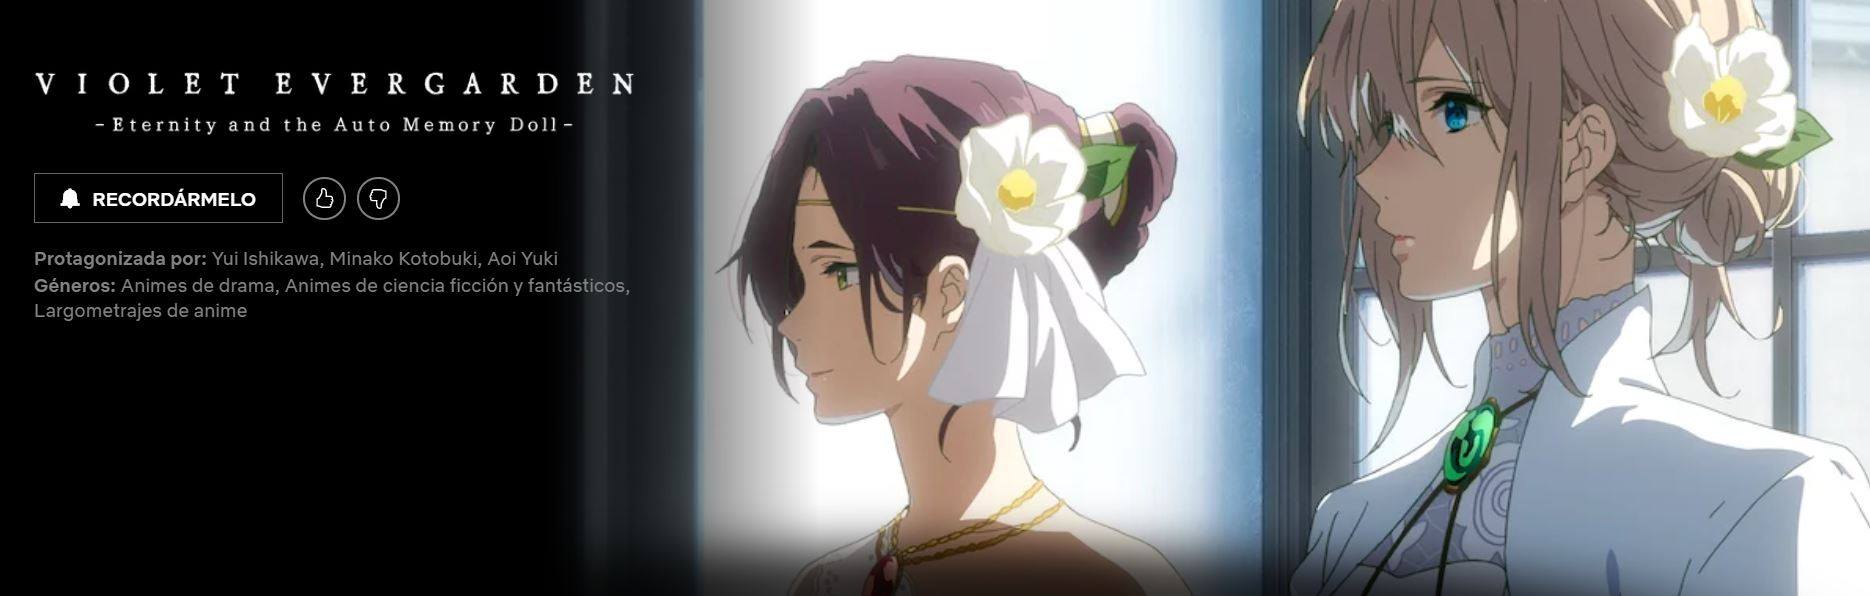 Otaku Center auf Twitter: „¡La historia alternativa del anime 'Violet  Evergarden' ya ha sido anunciada por @NetflixES !. 'Violet Evergarden I :  Eternity and the Auto Memory Doll', que así se titulará